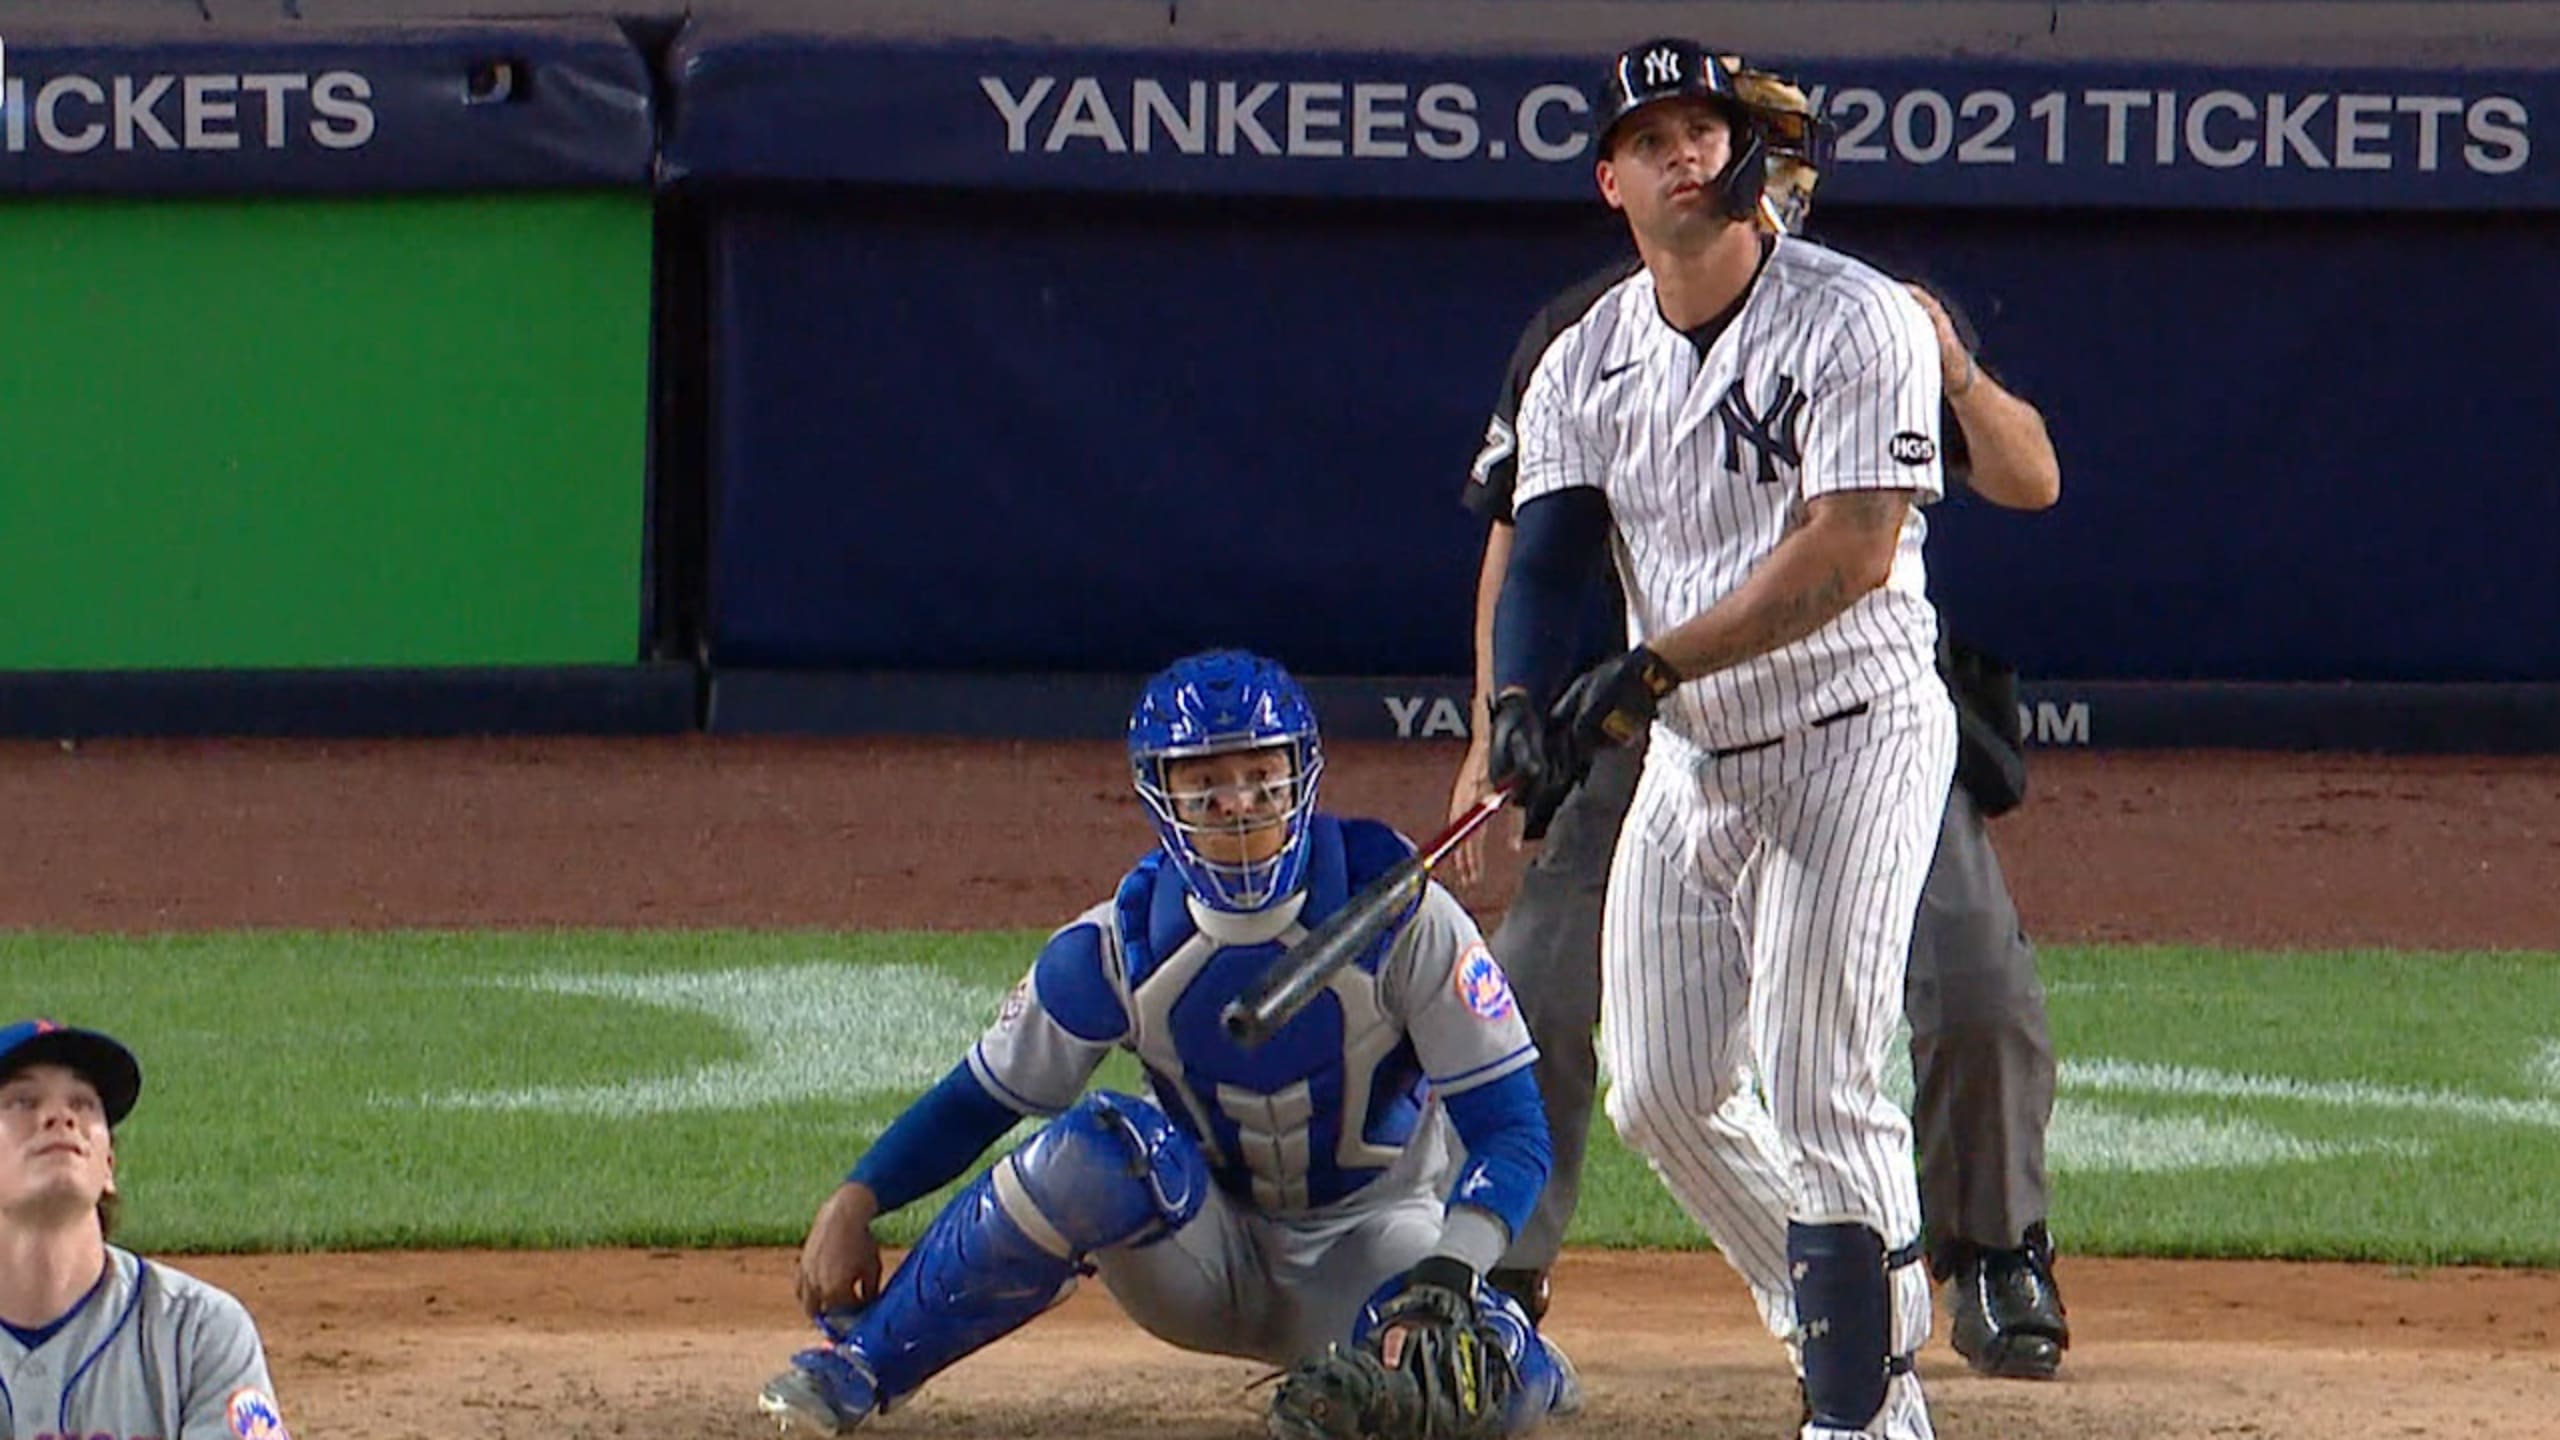 Yankees' Gio Urshela recovers from bat splinter in eye, hits go